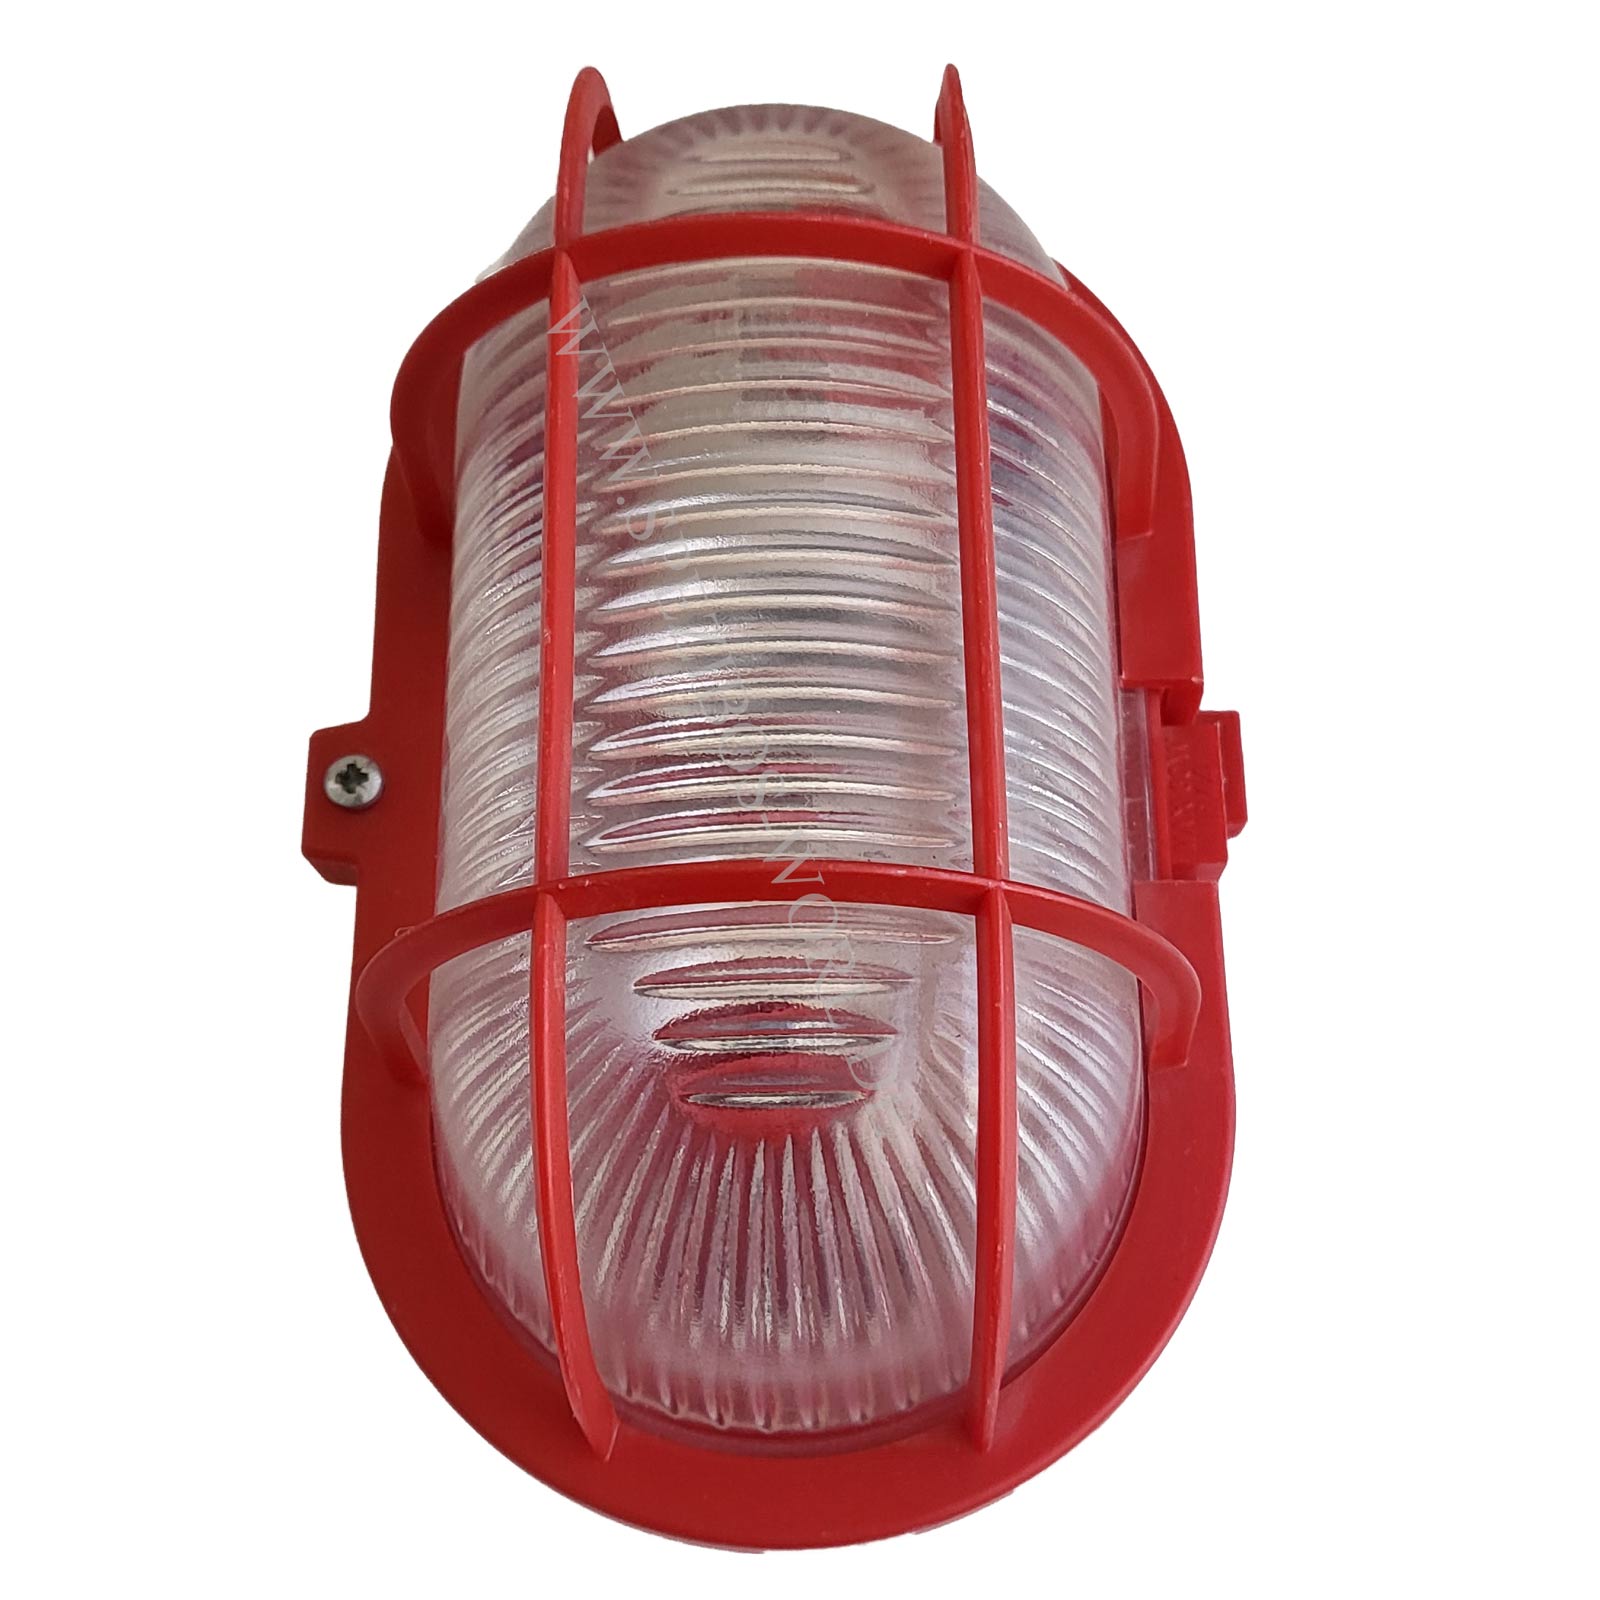 Kopp Kellerlampe Ovalarmatur , rot Spezibos-world Fassung E27